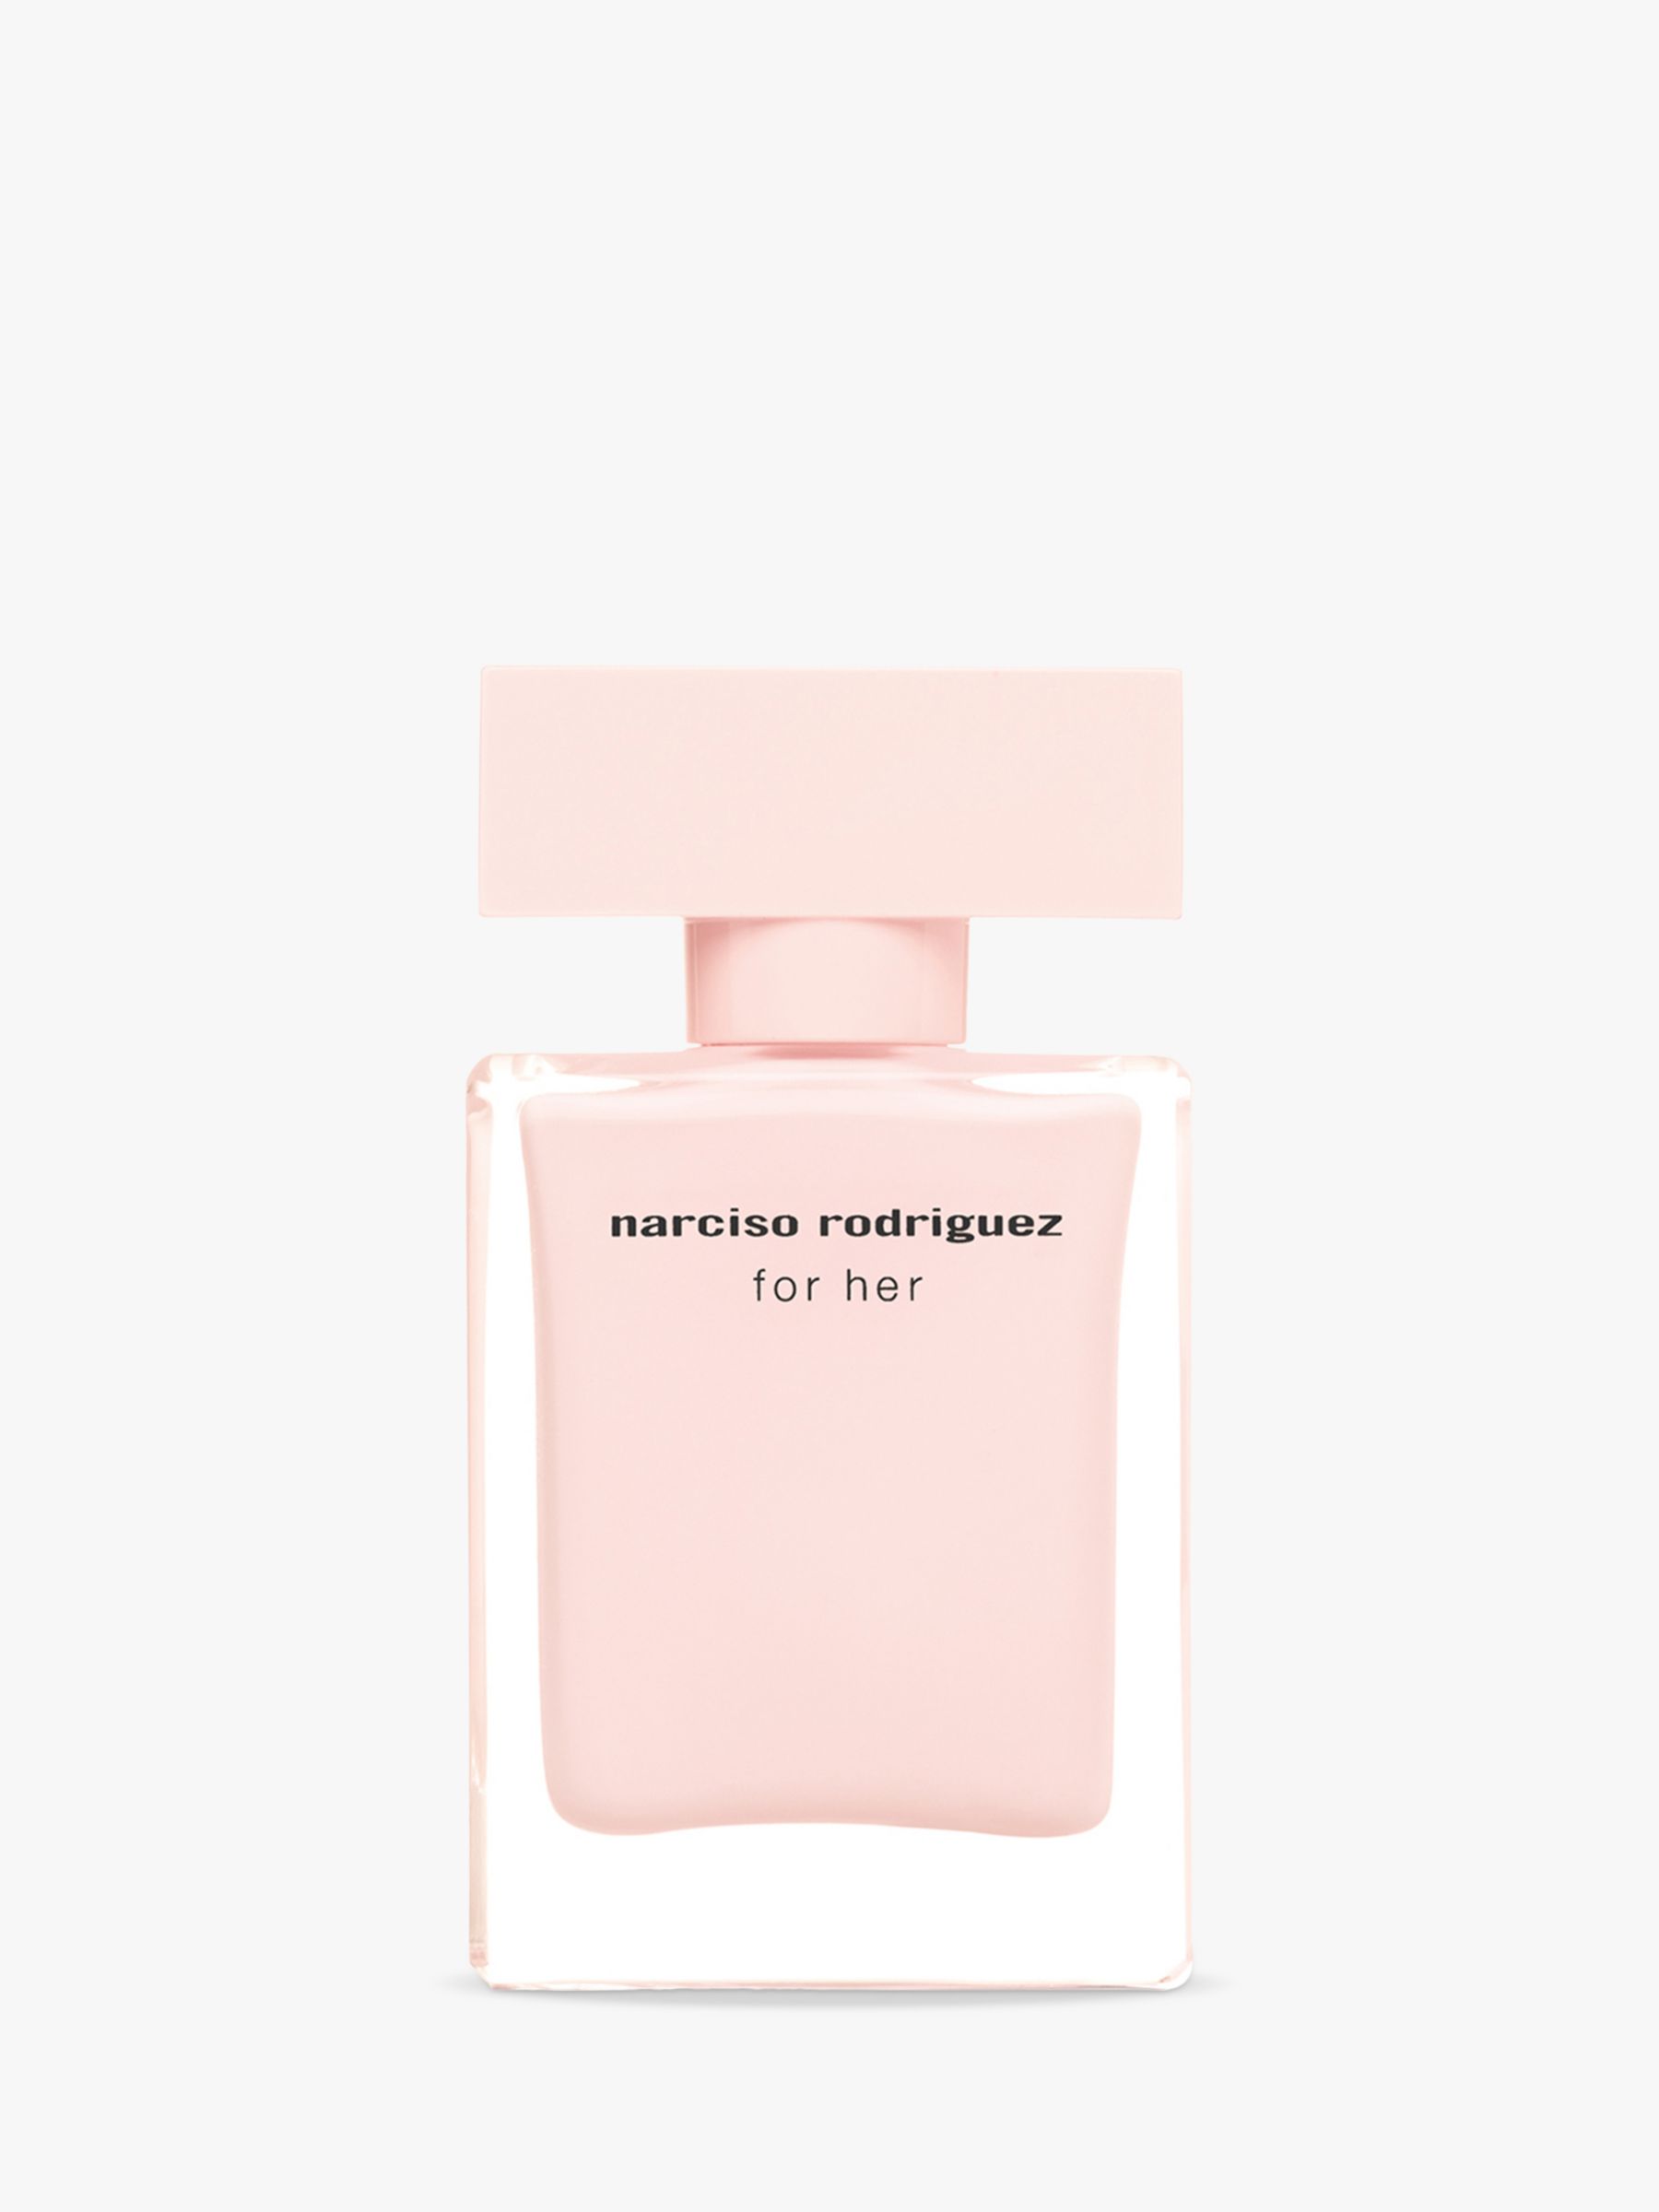 Narciso Rodriguez for Her Eau de Parfum at John Lewis